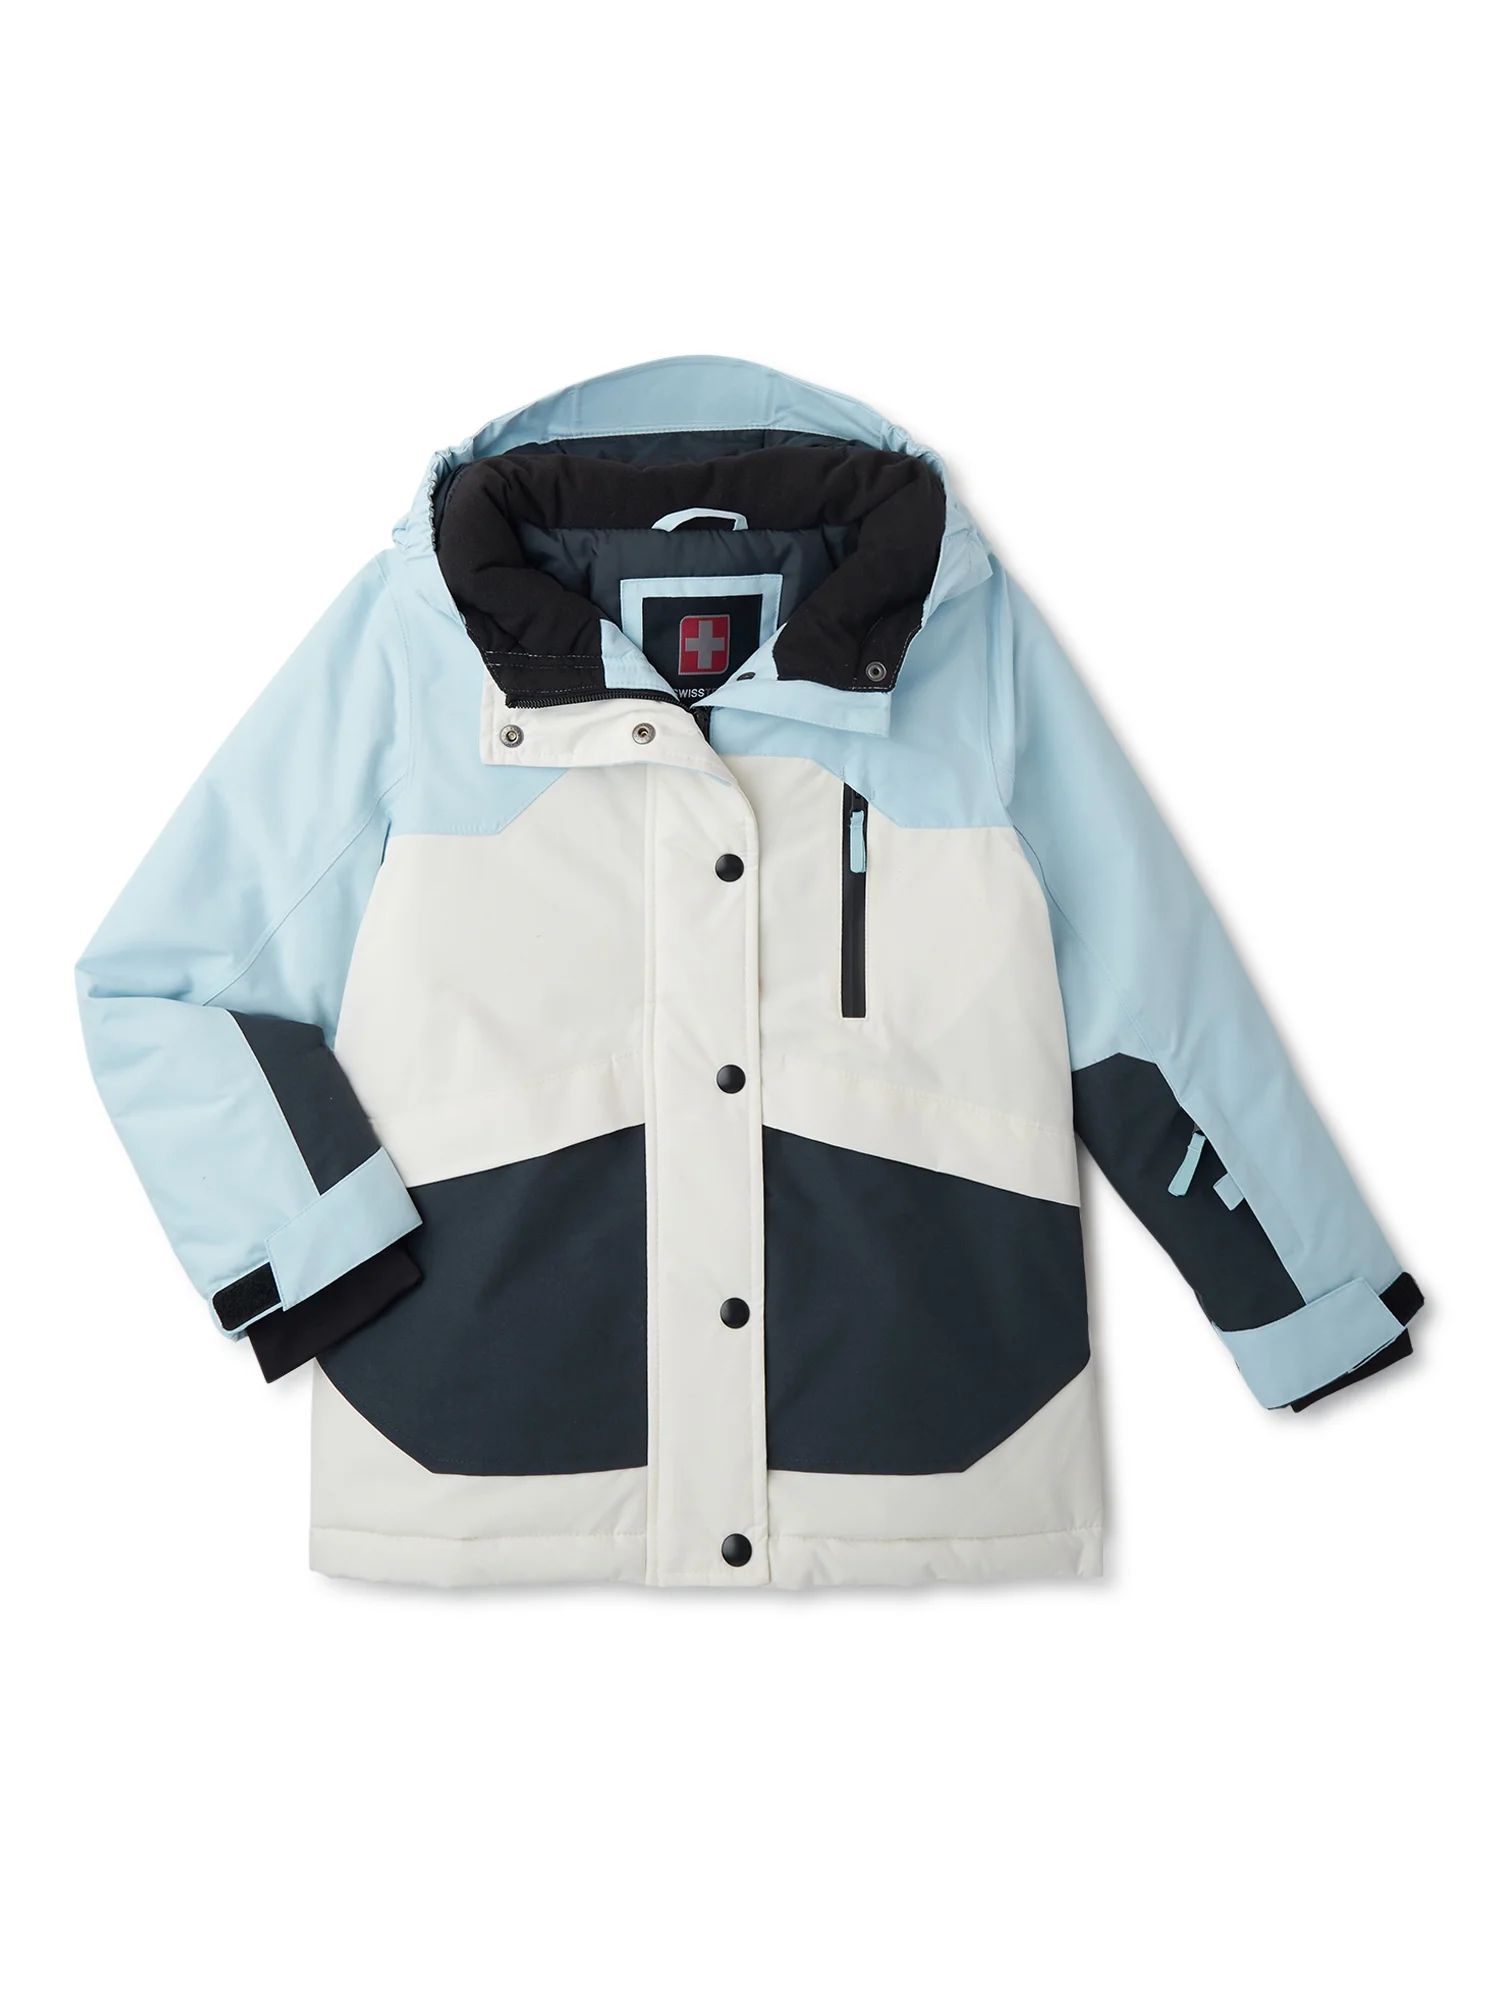 Swiss Tech Girls Waterproof Ski Jacket with Hood, Sizes 4-18 - Walmart.com | Walmart (US)